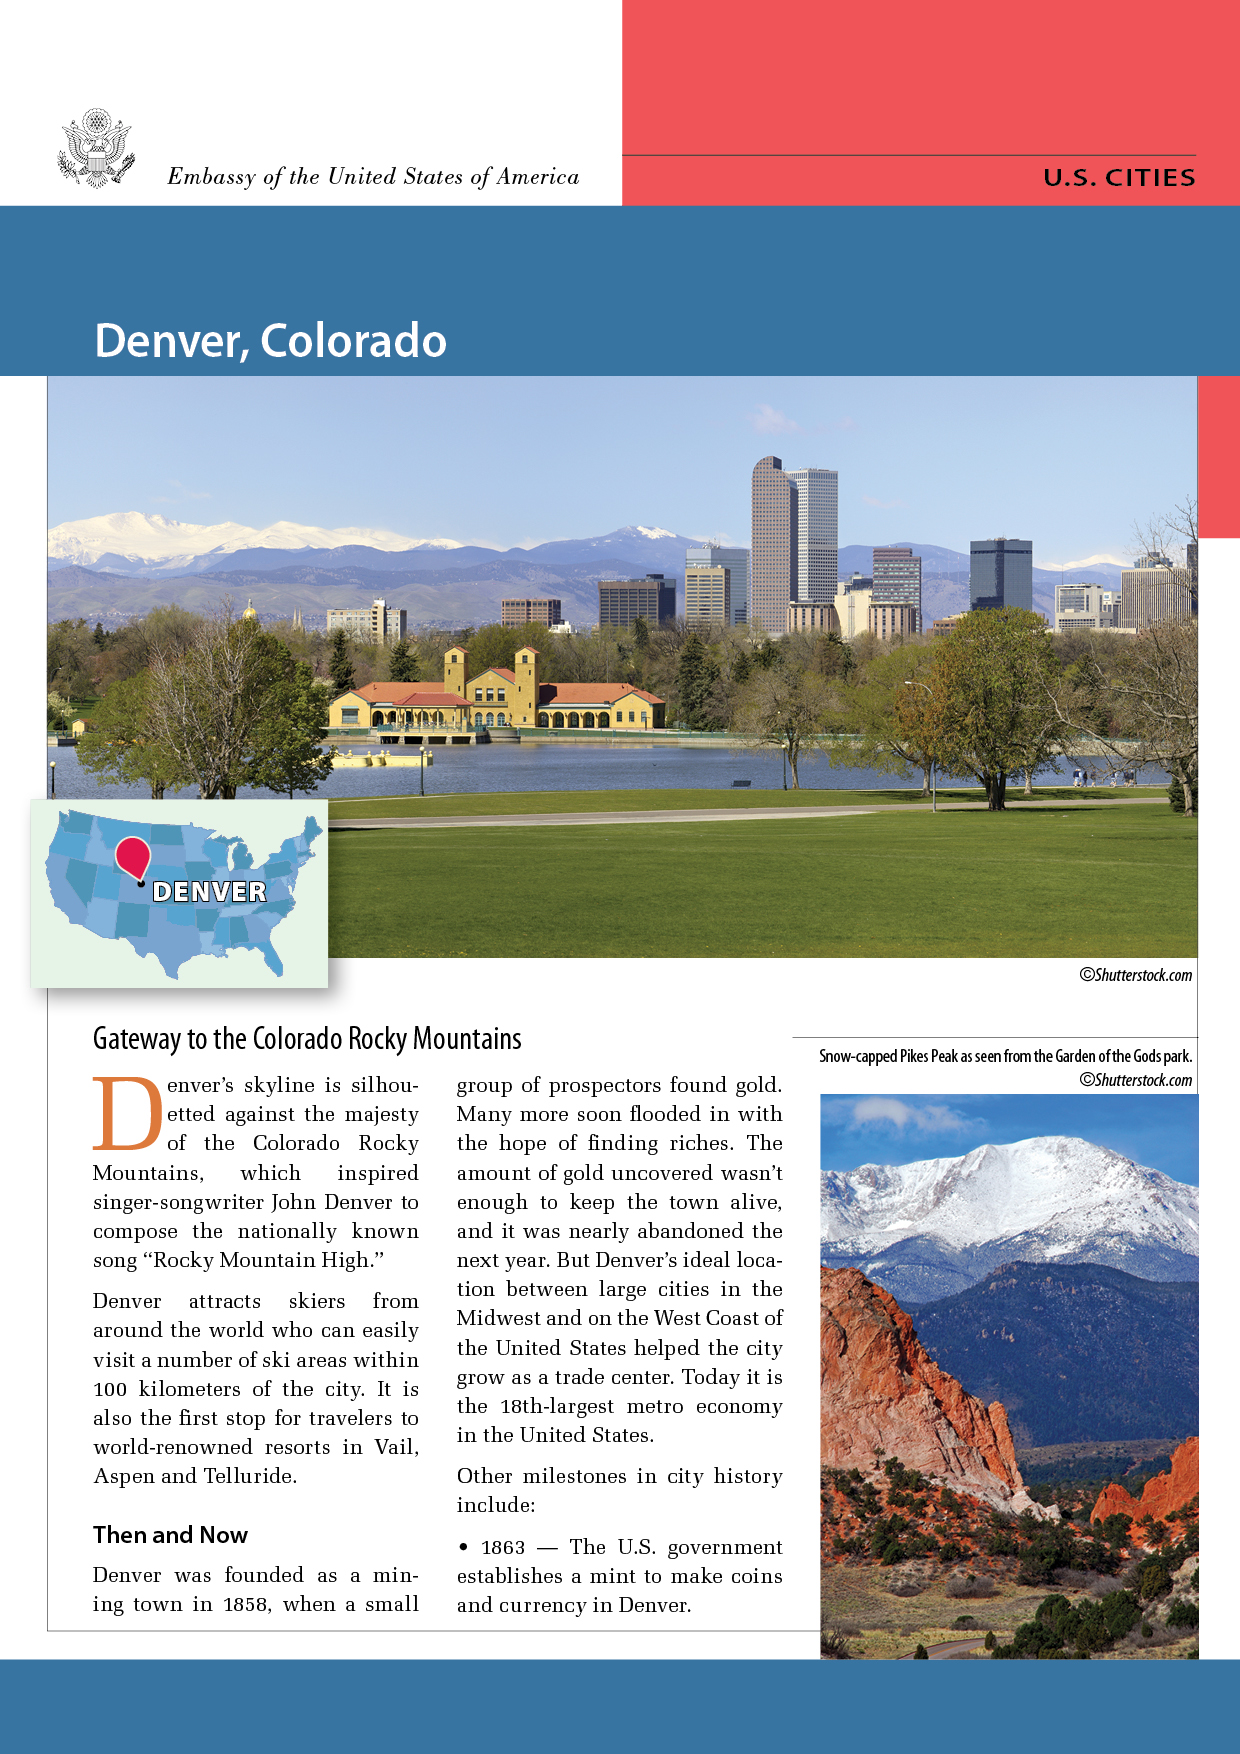 Denver, Colorado: Gateway to the Colorado Rocky Mountains